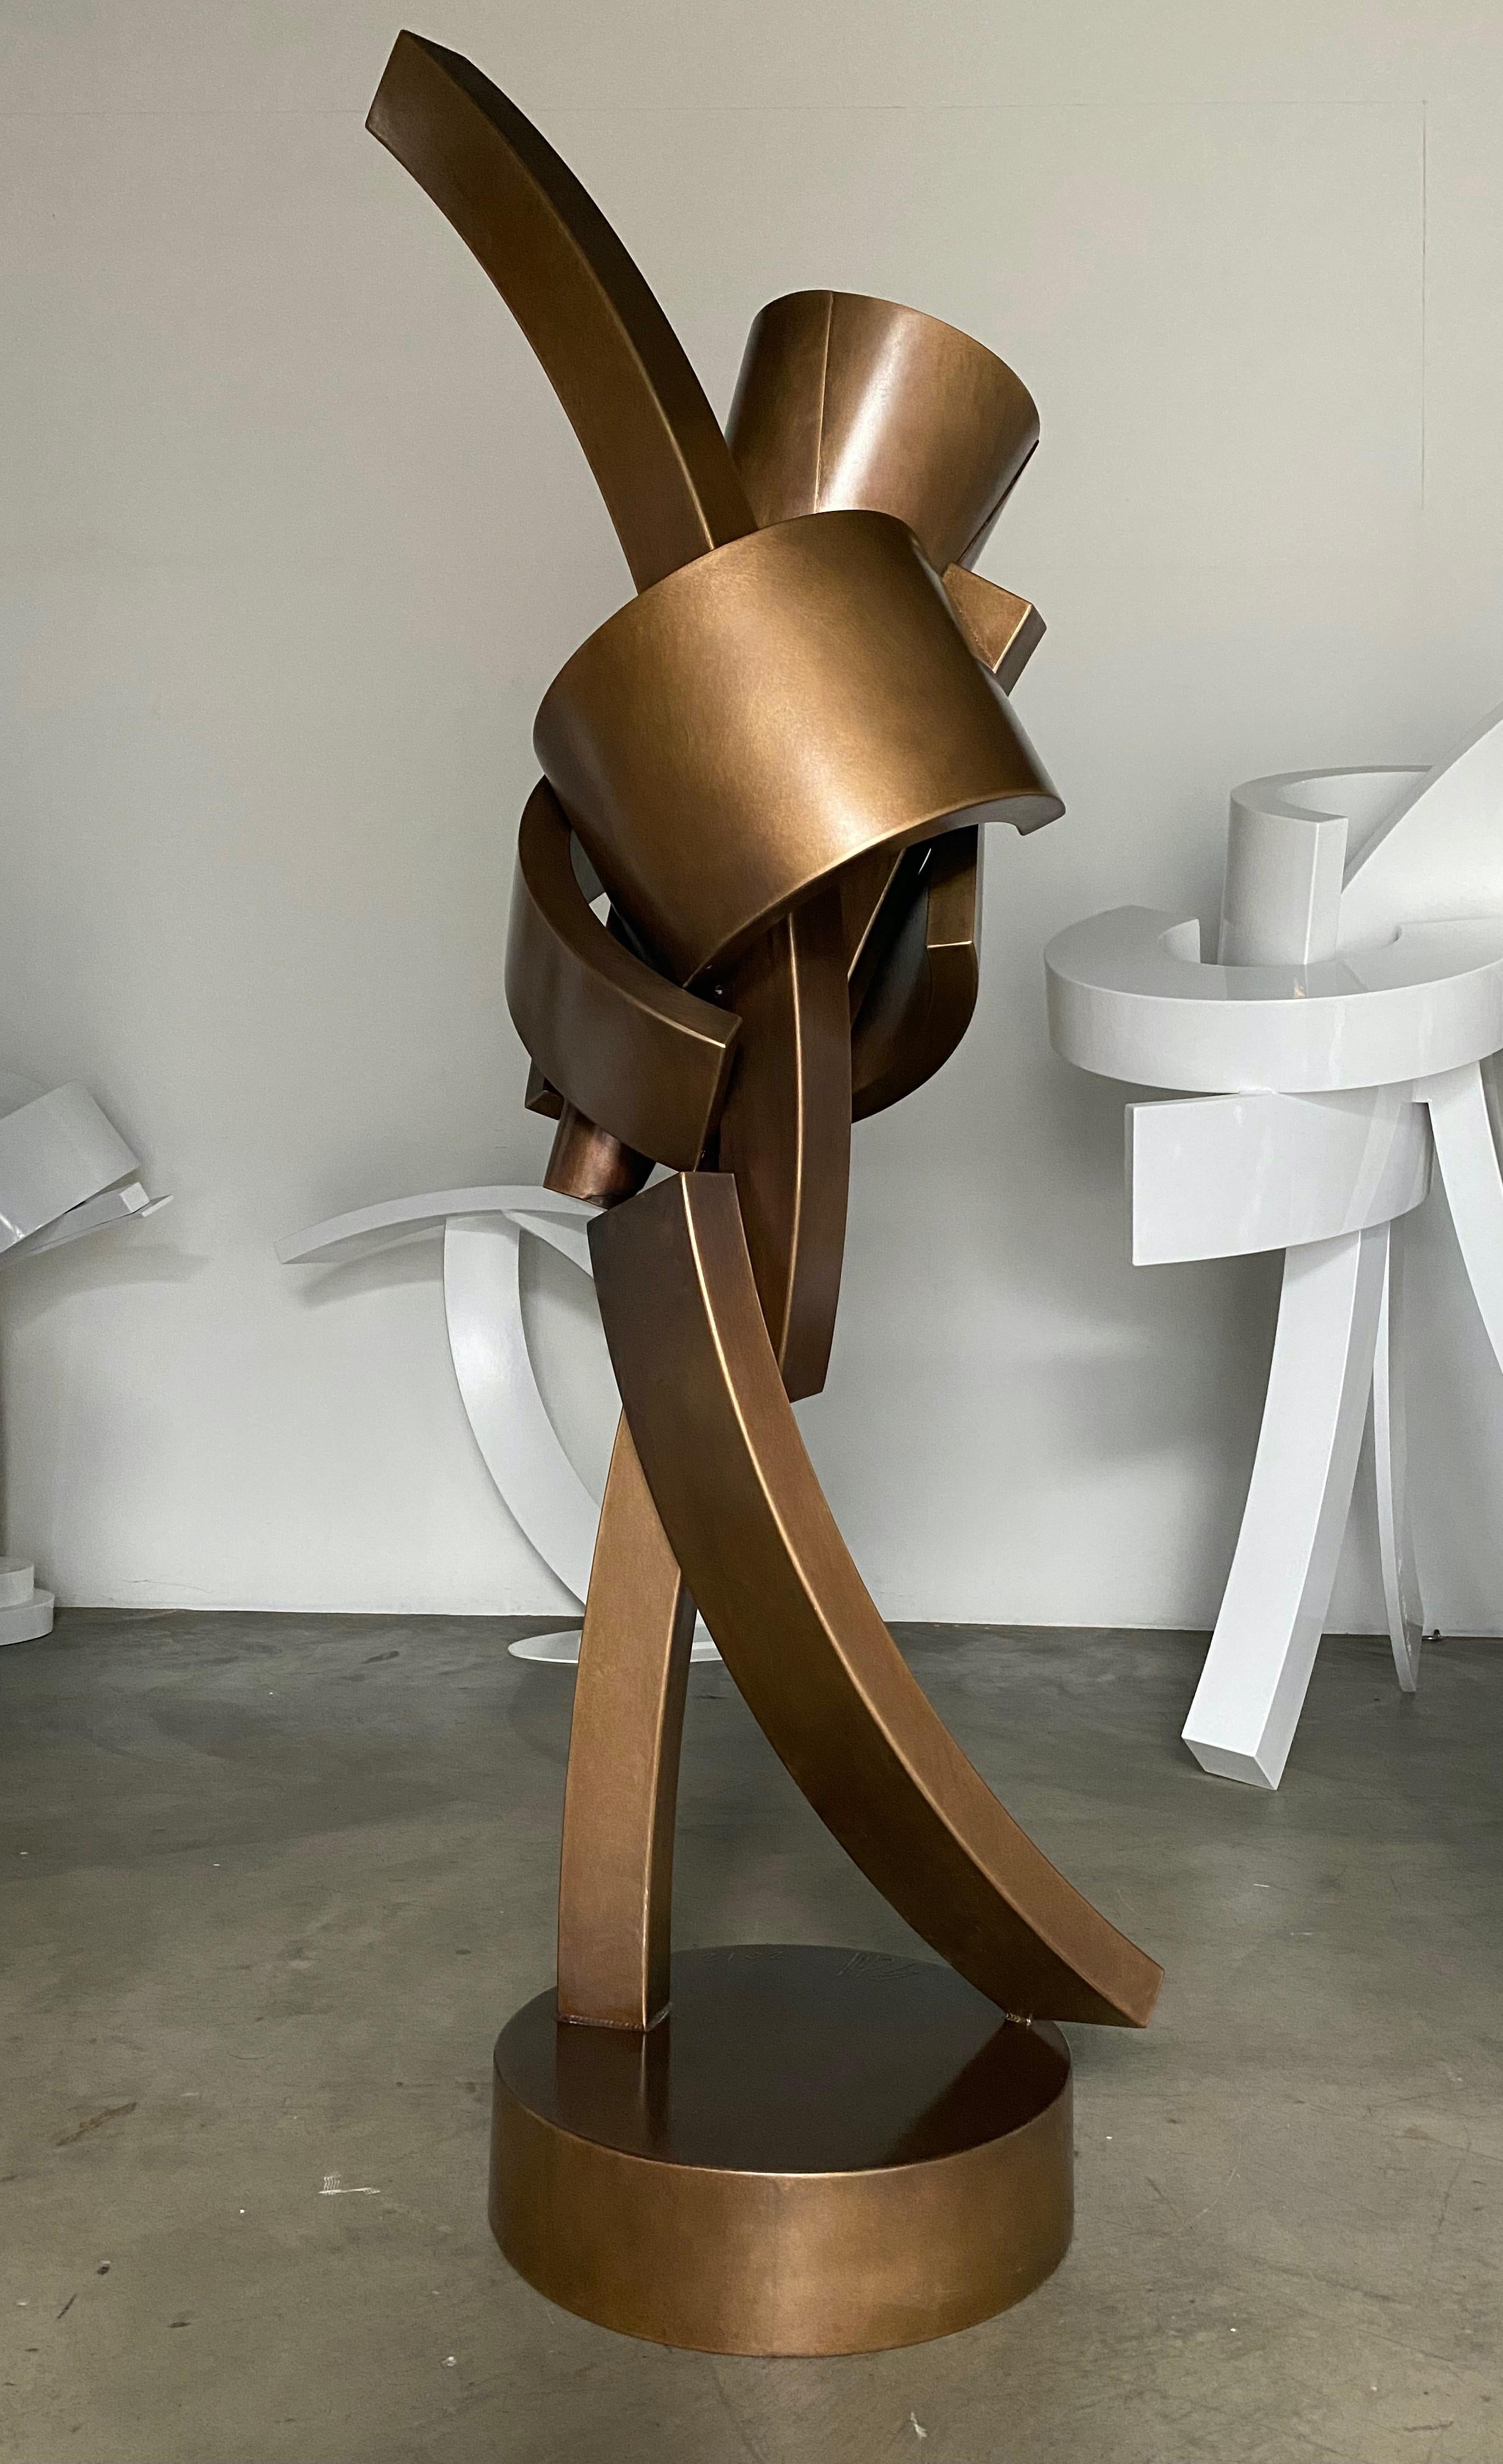 Abstract Sculpture Guy Dill - Venise délicate